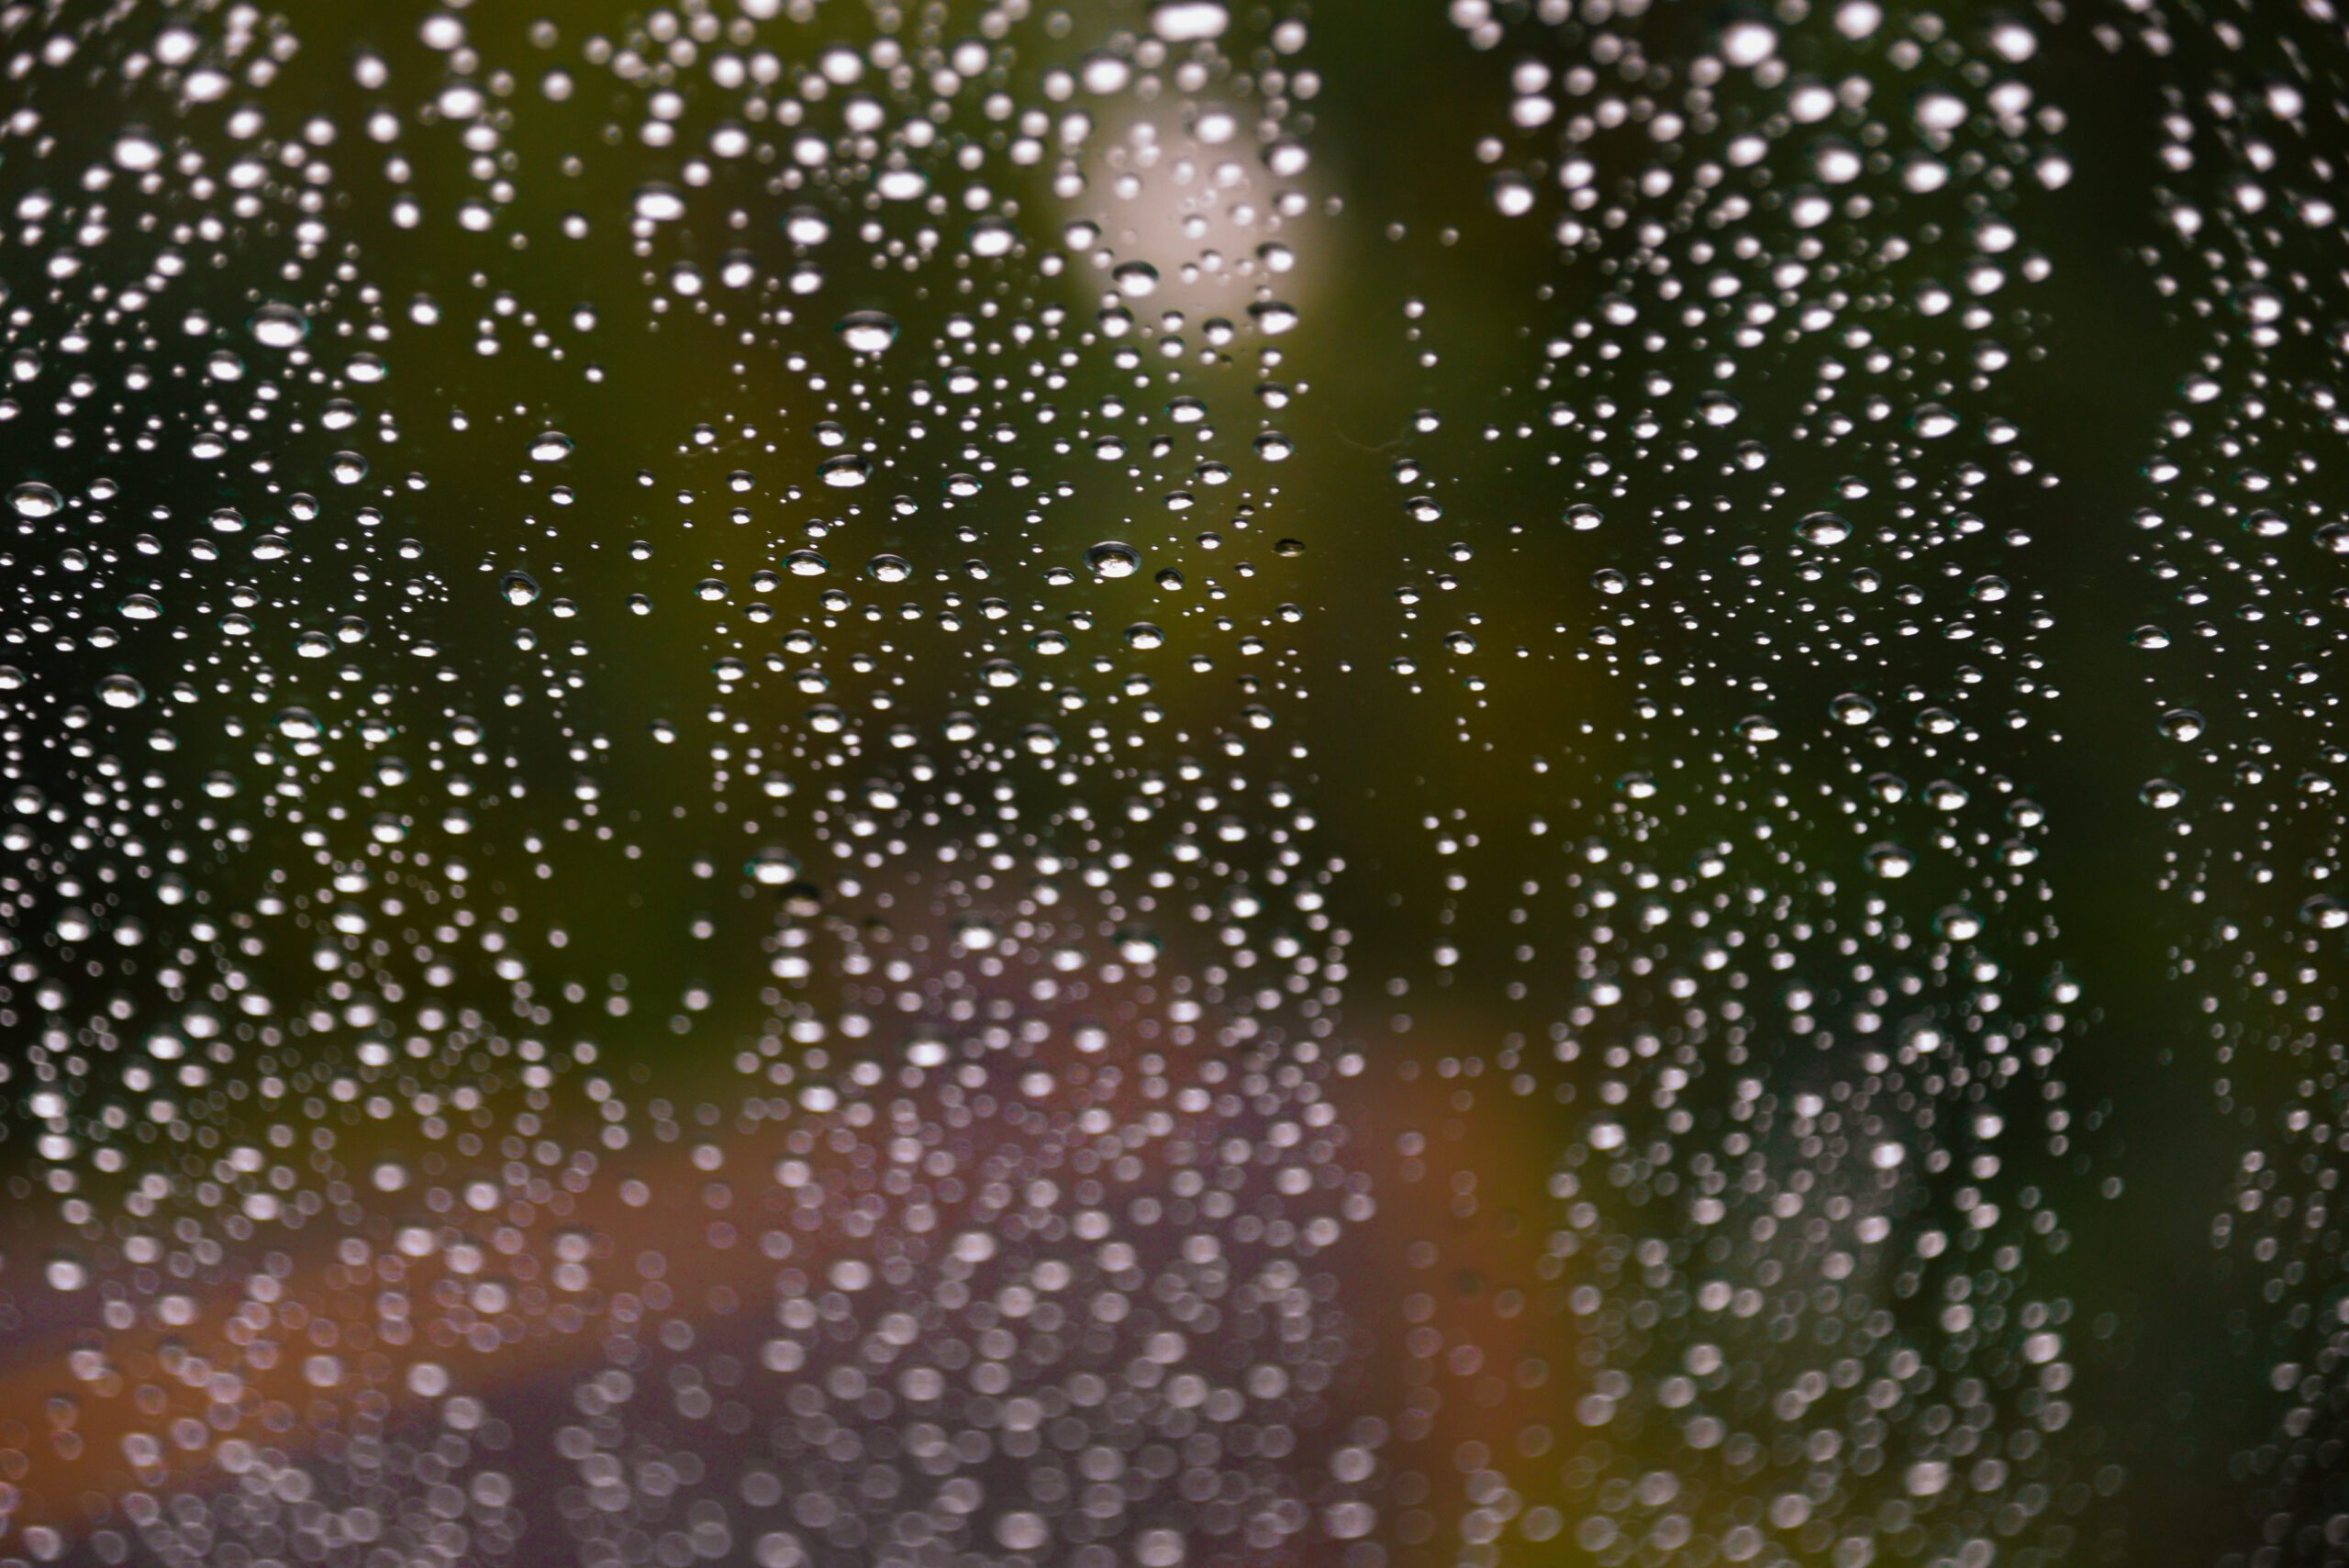 Rain drops beading on window by Franklin Crawford 2021